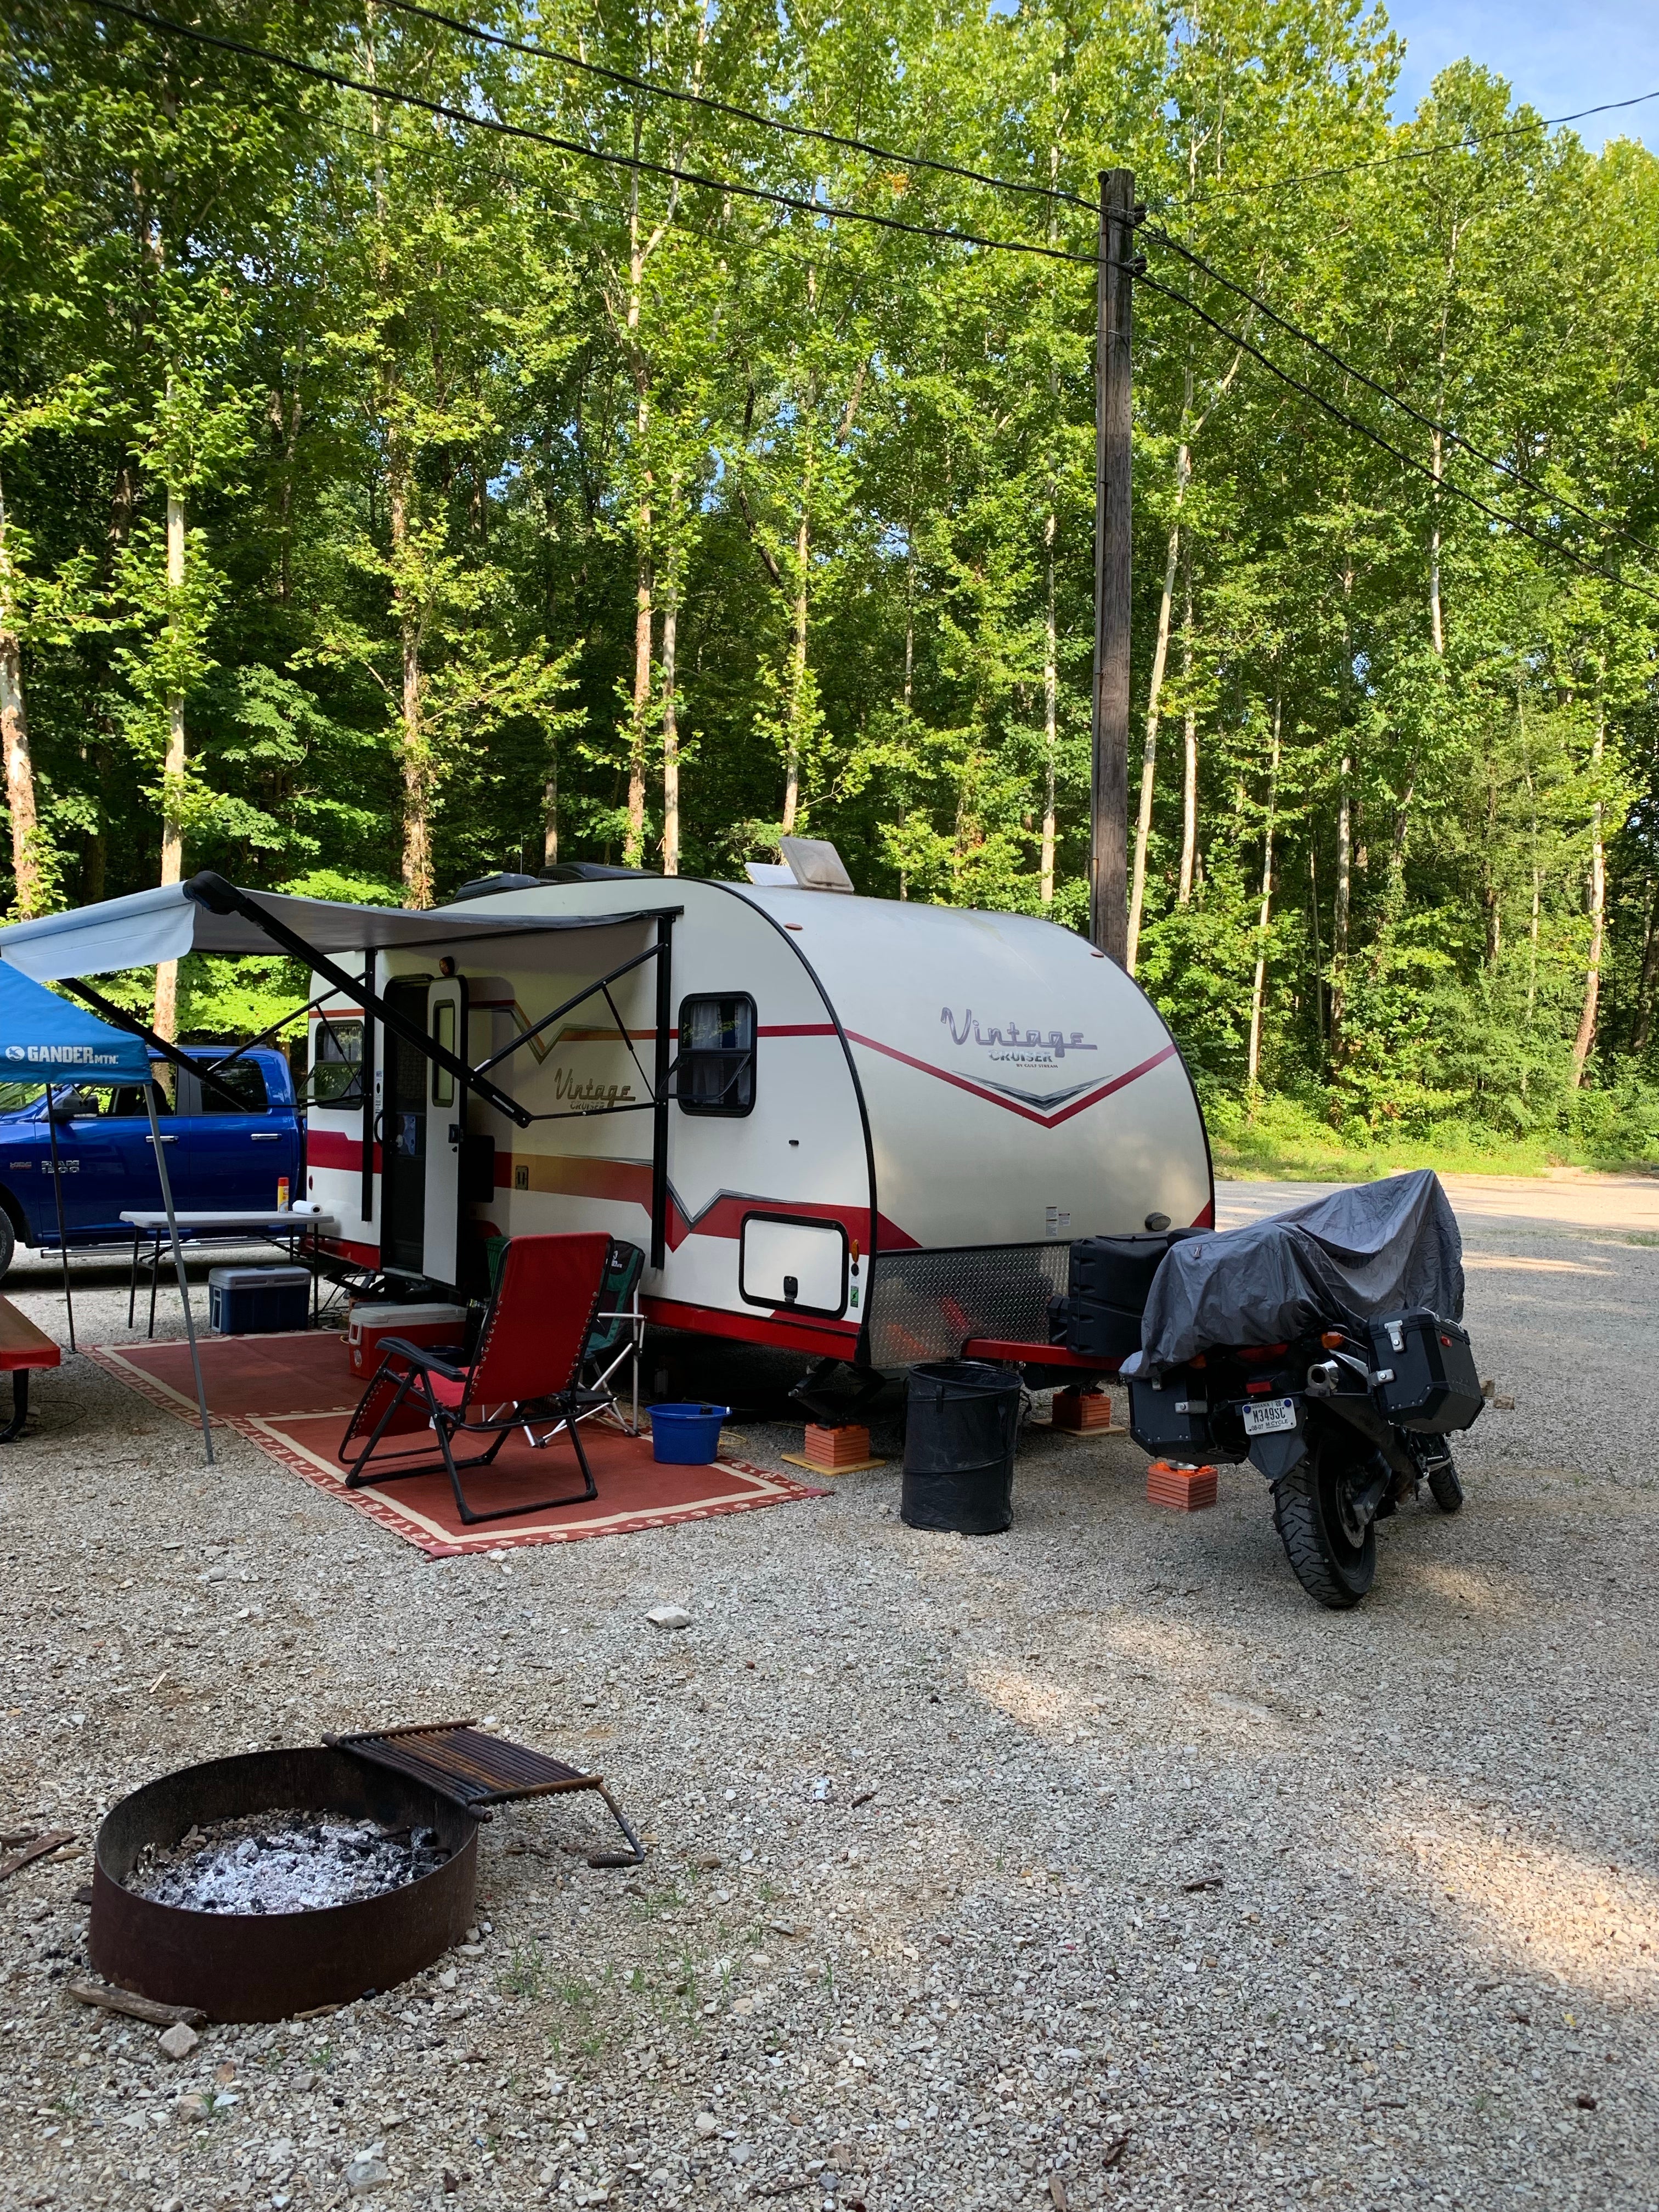 Typical campsite